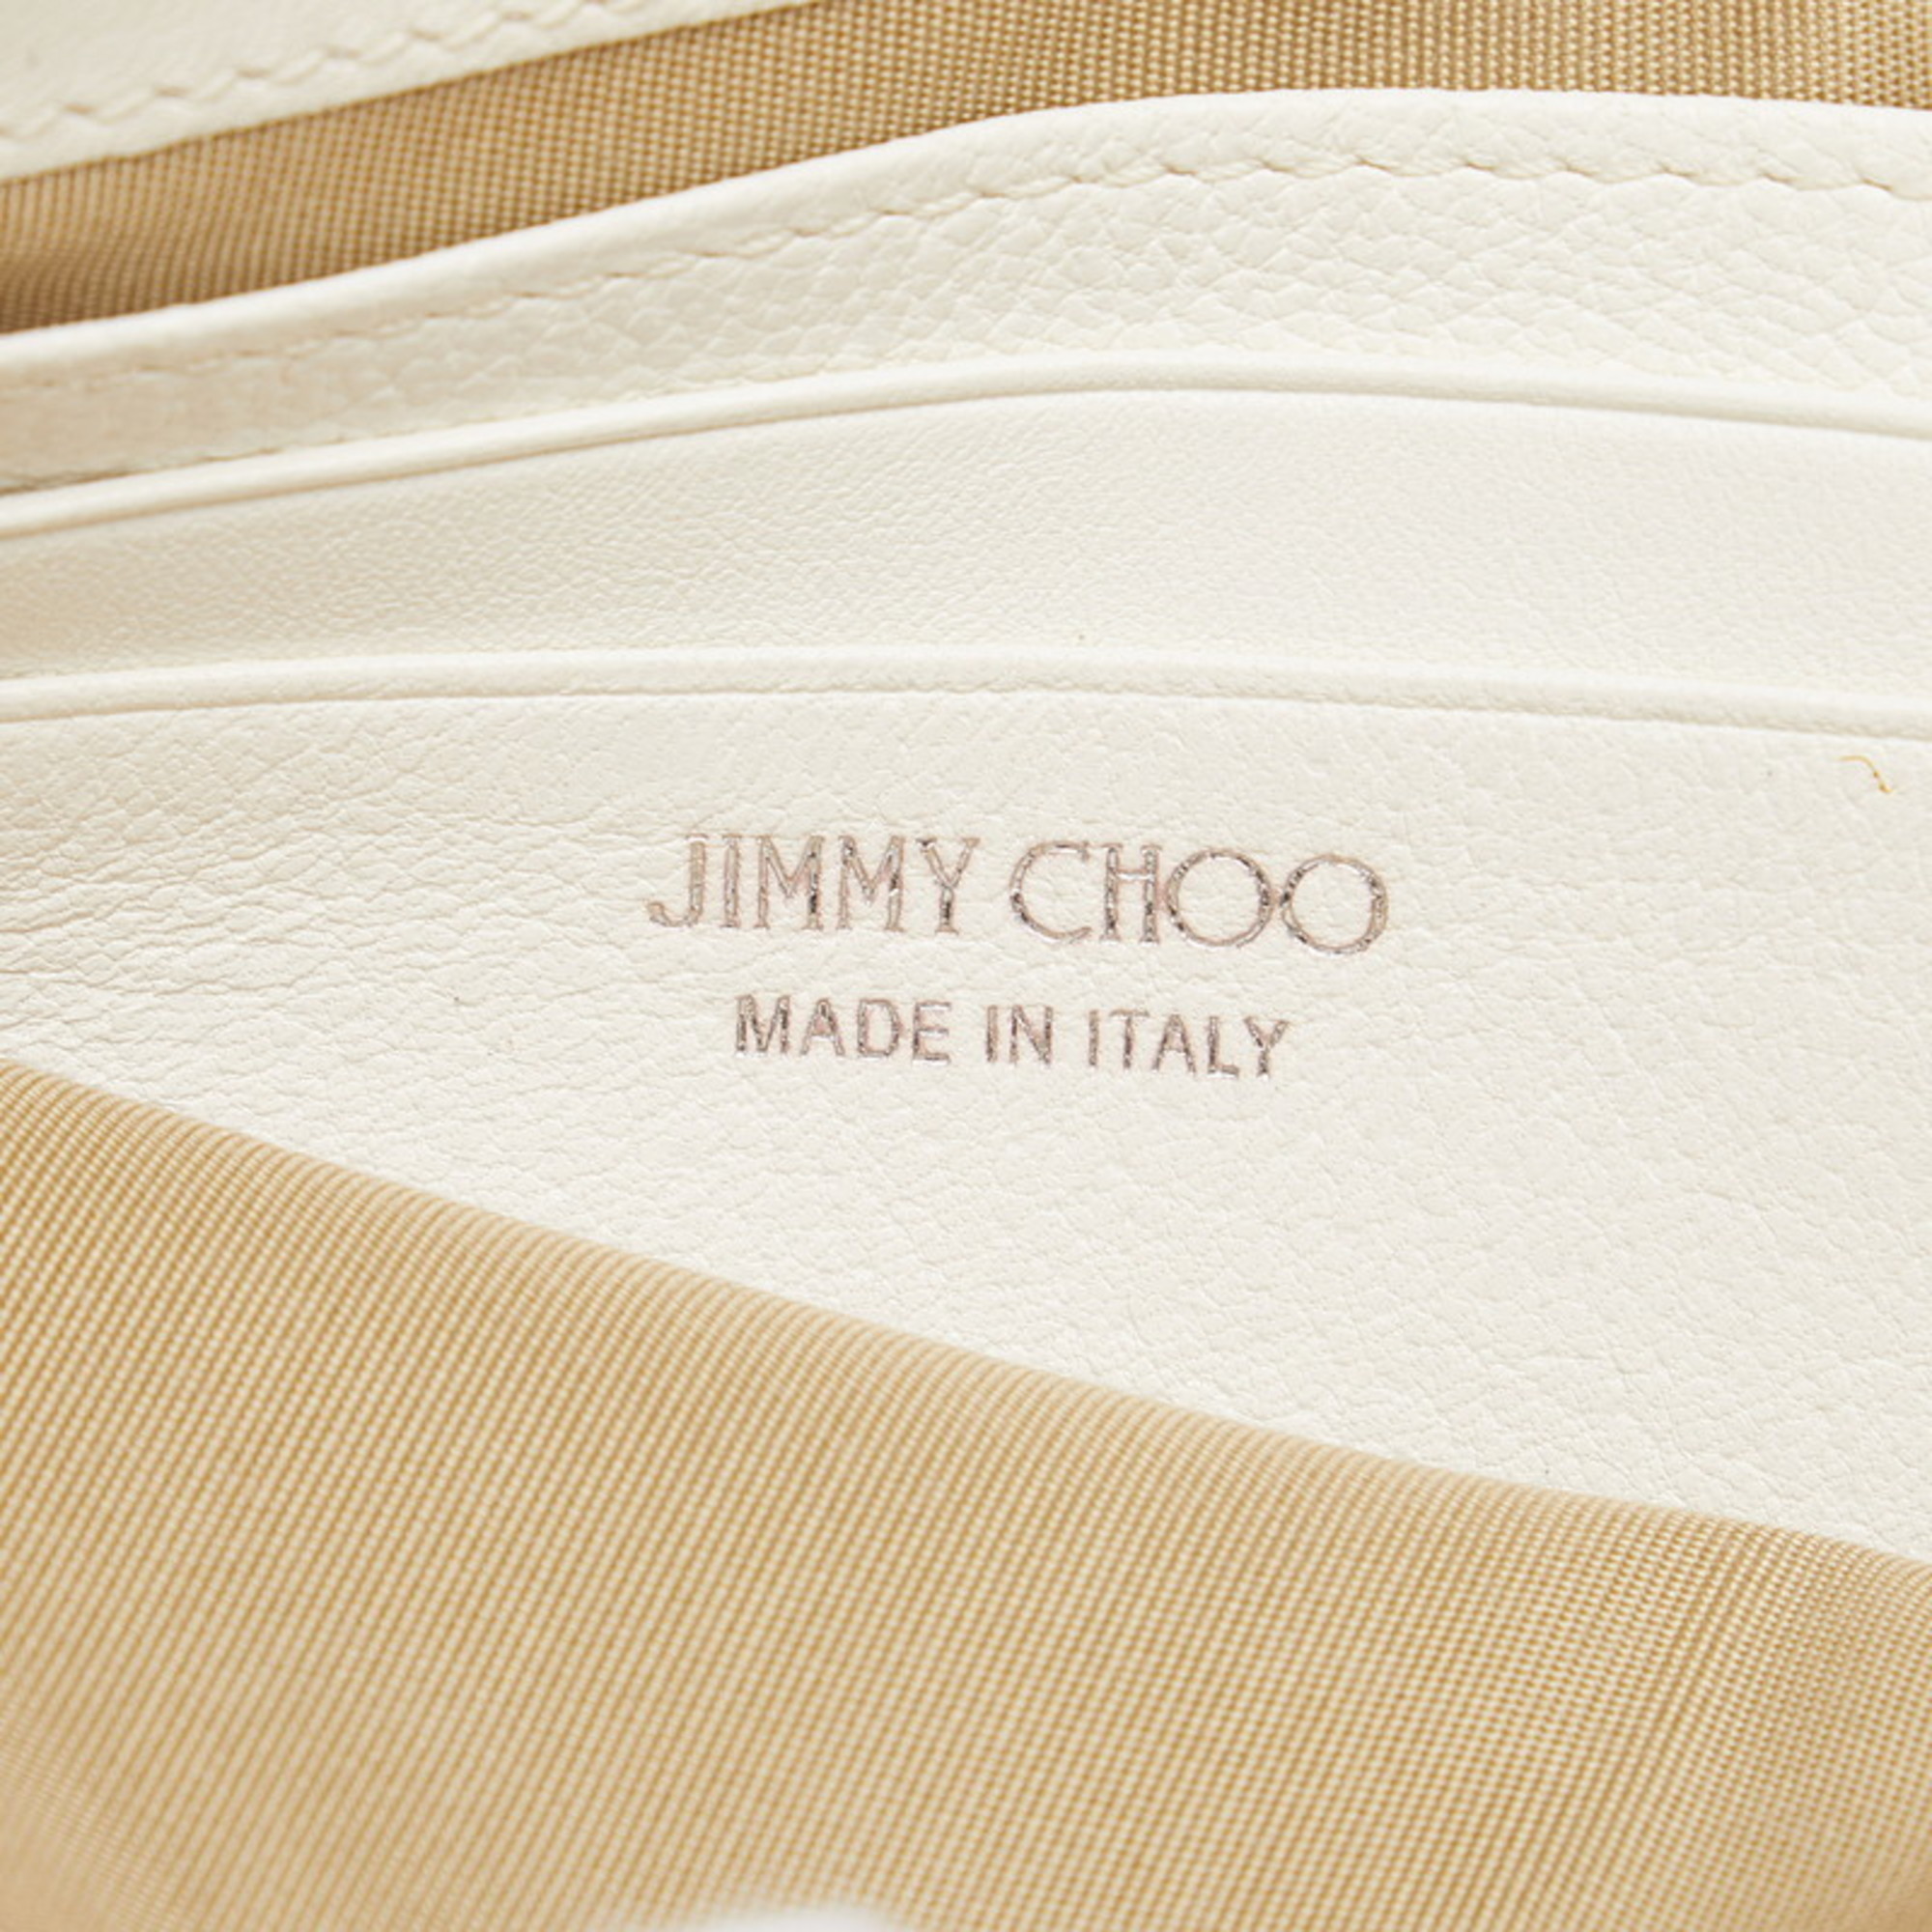 Jimmy Choo Star Studded Chain Shoulder Bag White Silver Leather Women's JIMMY CHOO